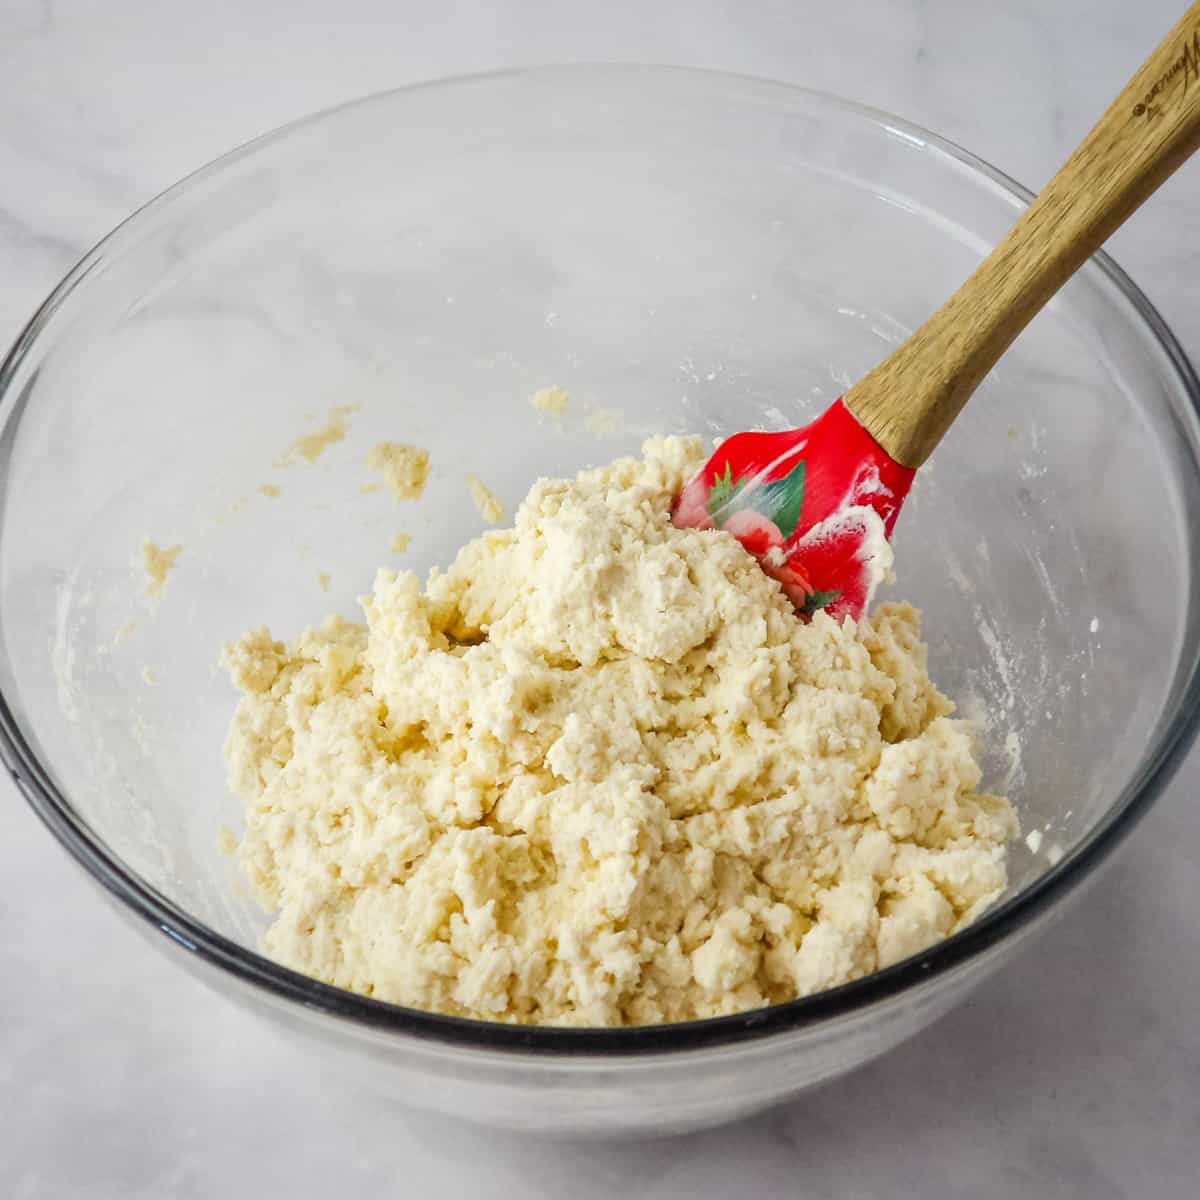 Folding buttermilk into self-rising flour in a glass bowl.